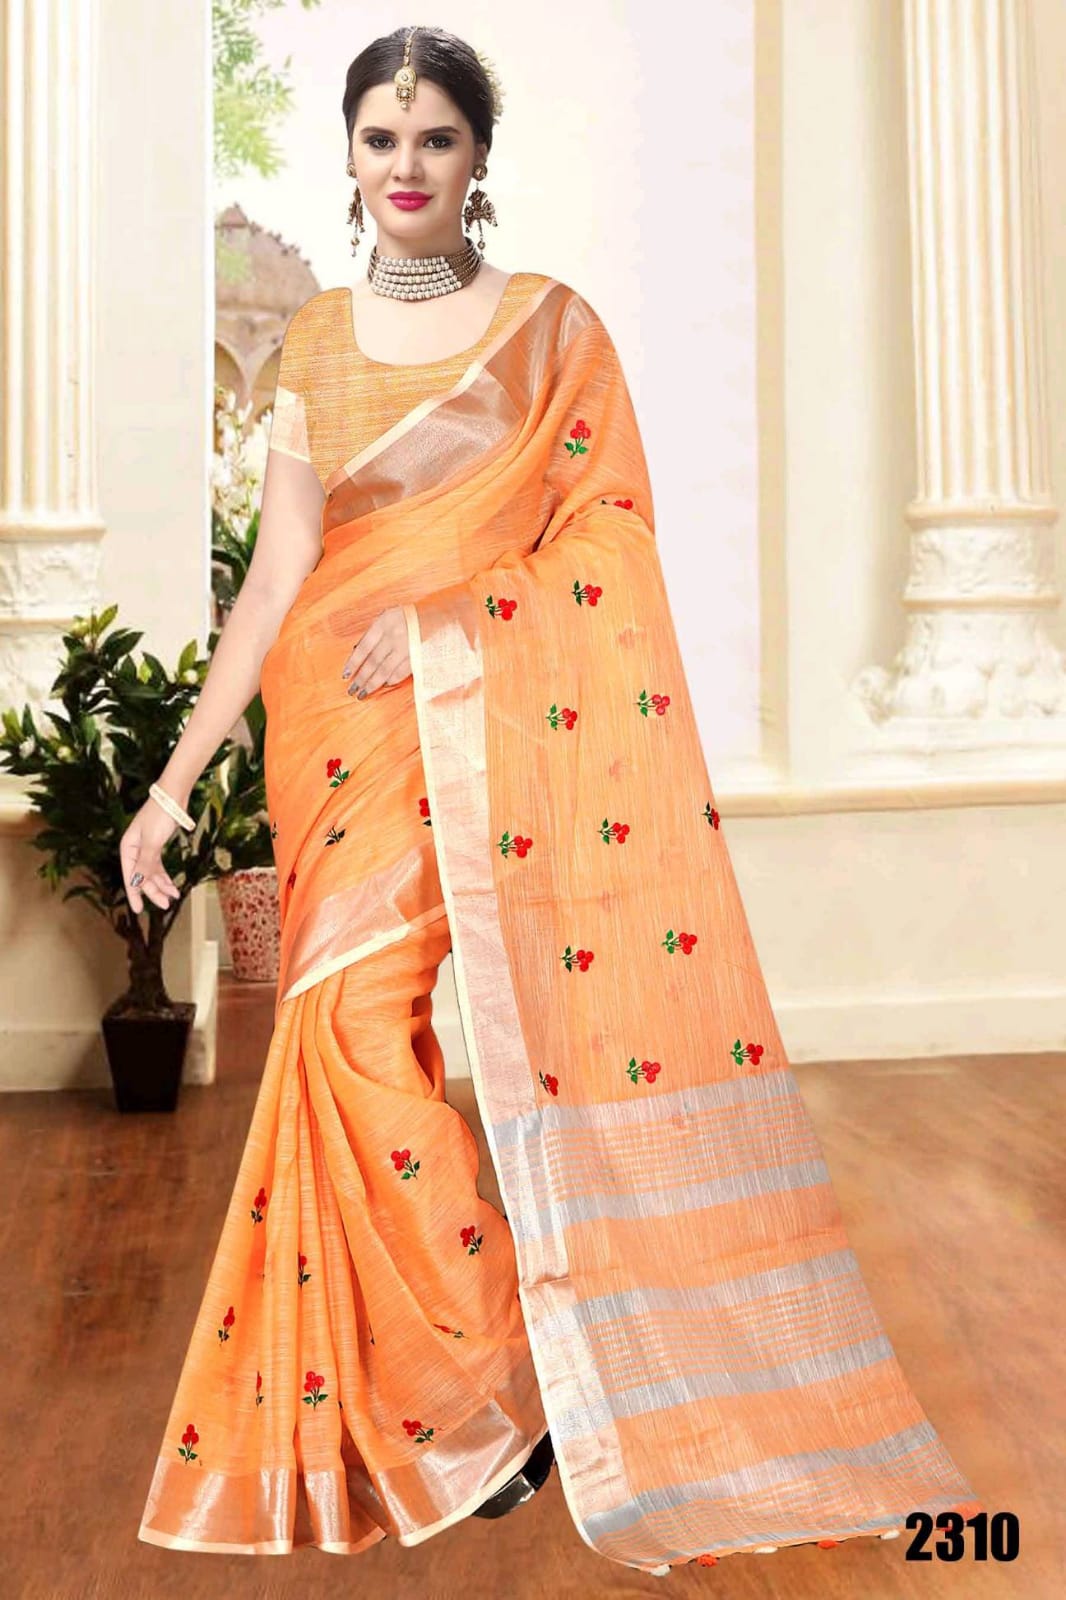 Priyanka Present 2310-2315 Series Linen Party Wear Good Looking Saree